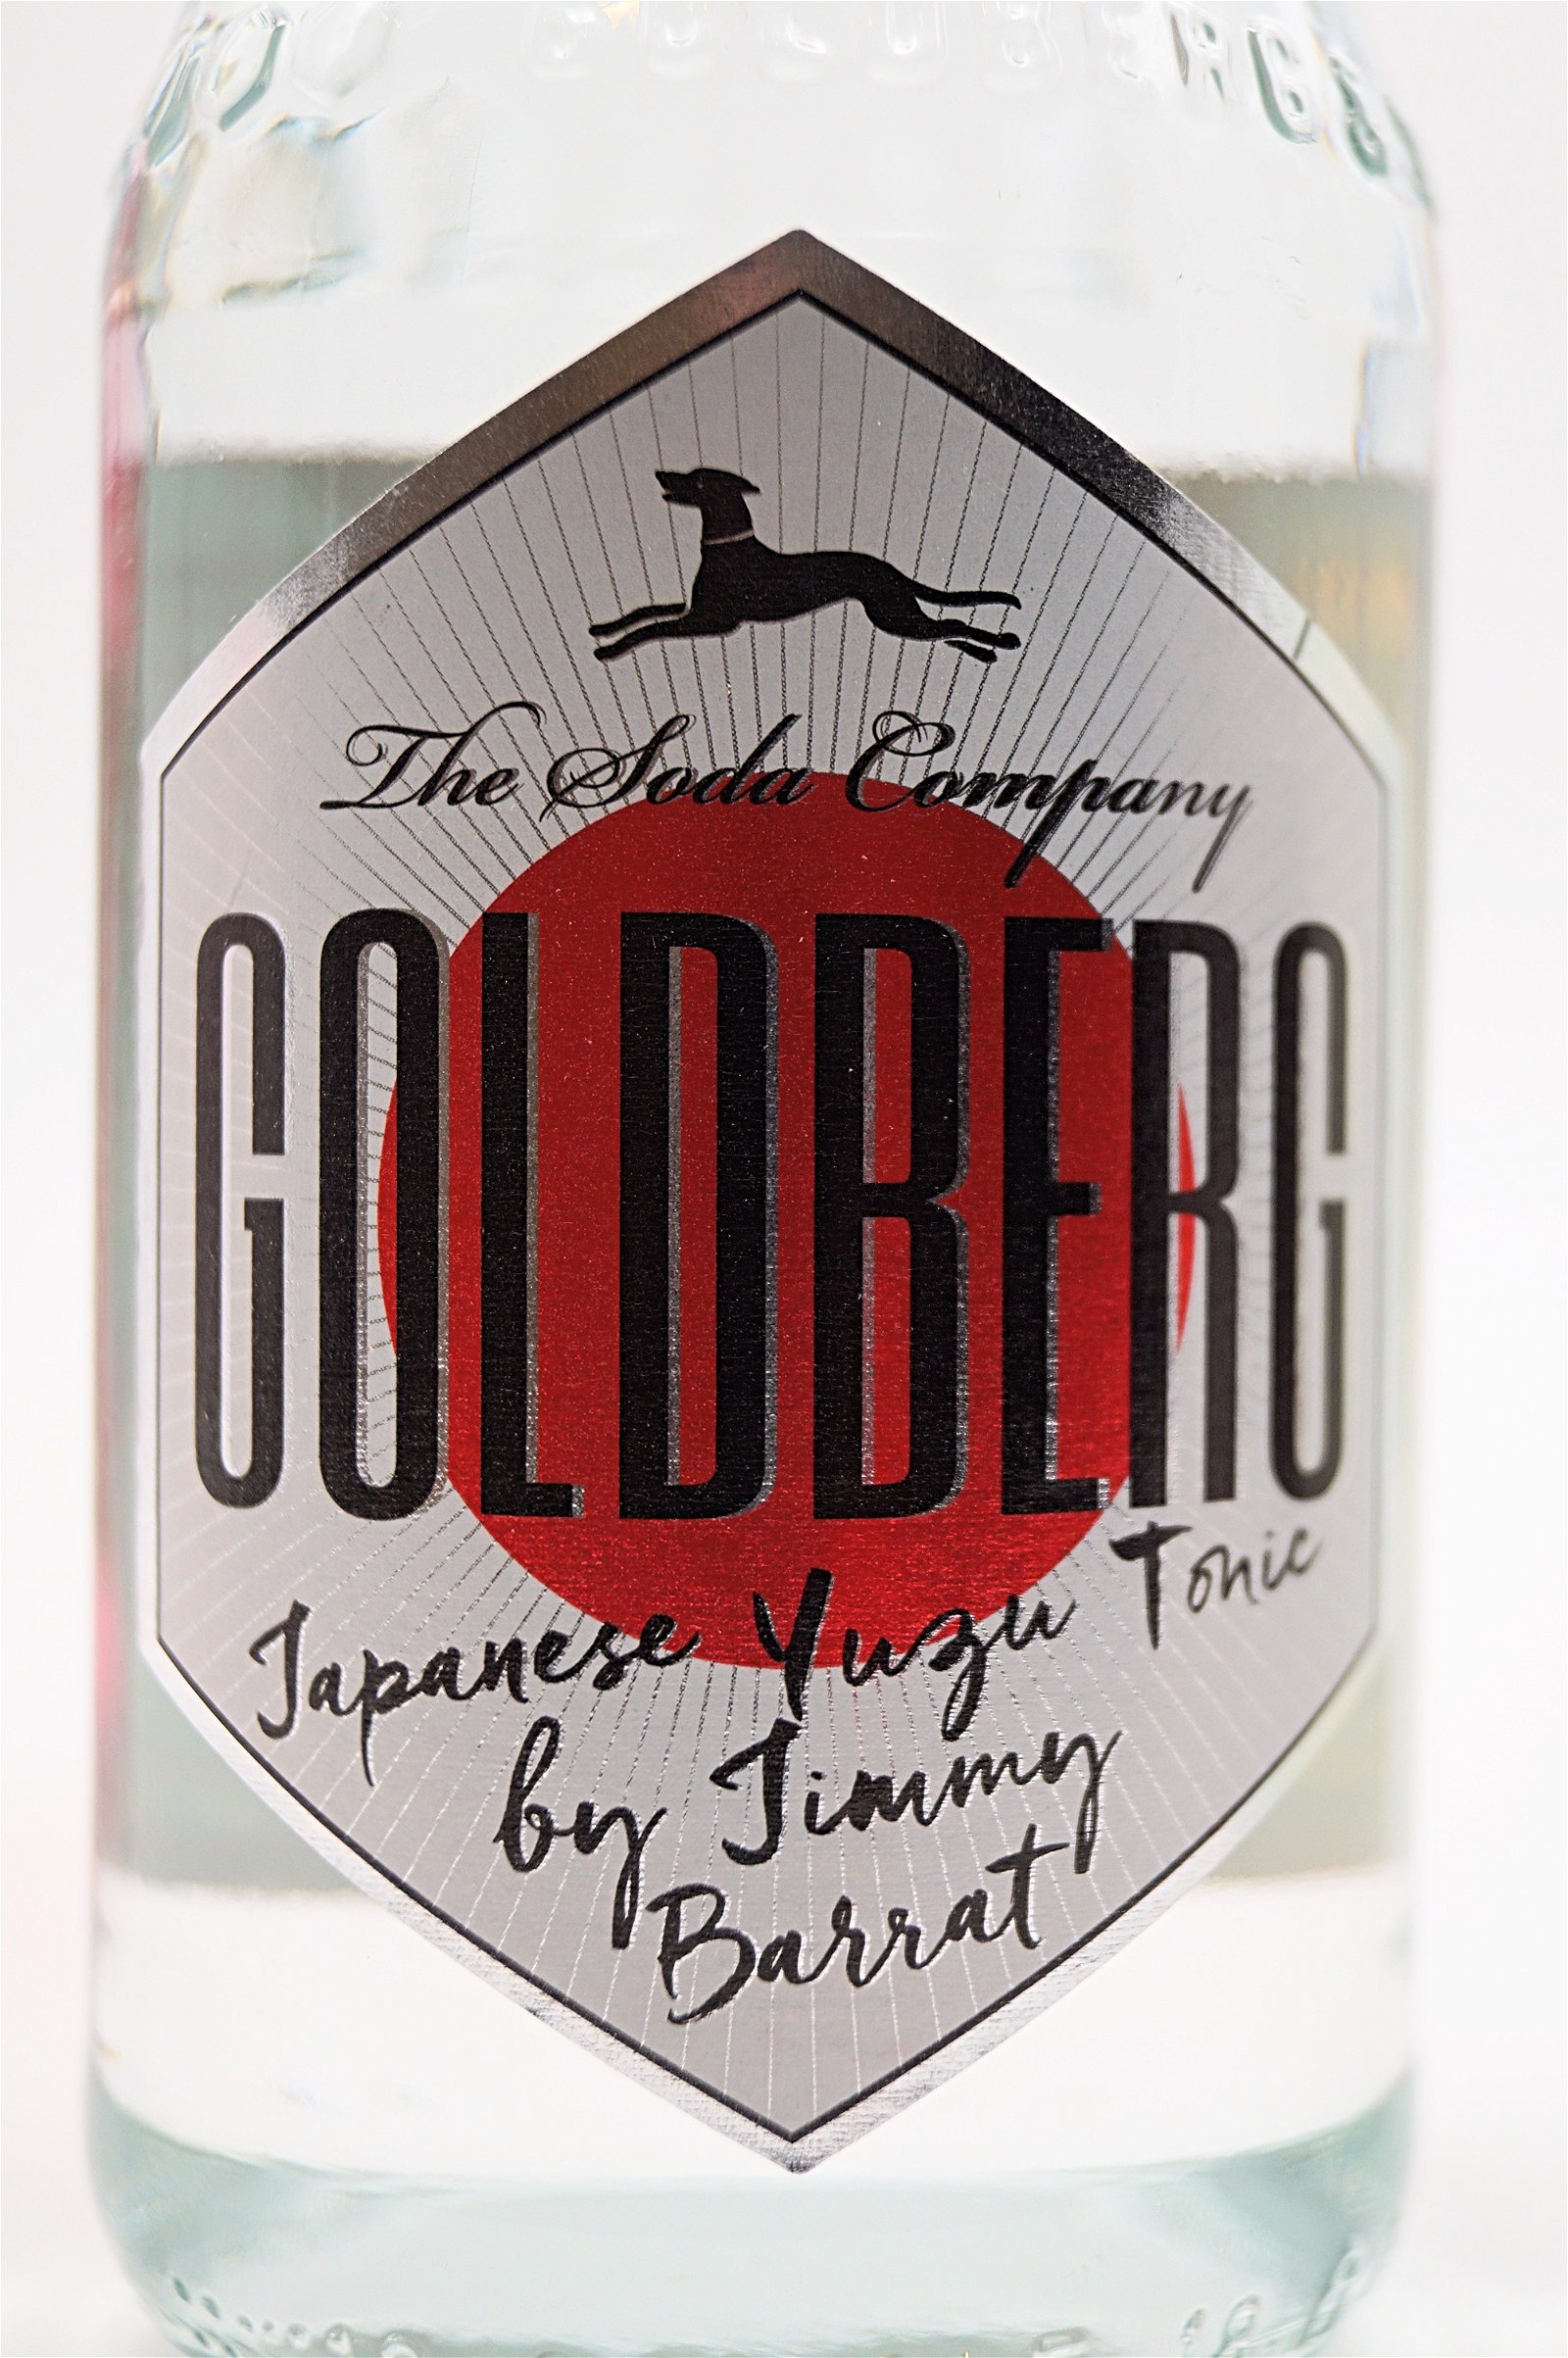 Goldberg & Sons Japanese Yuzu Tonic Water